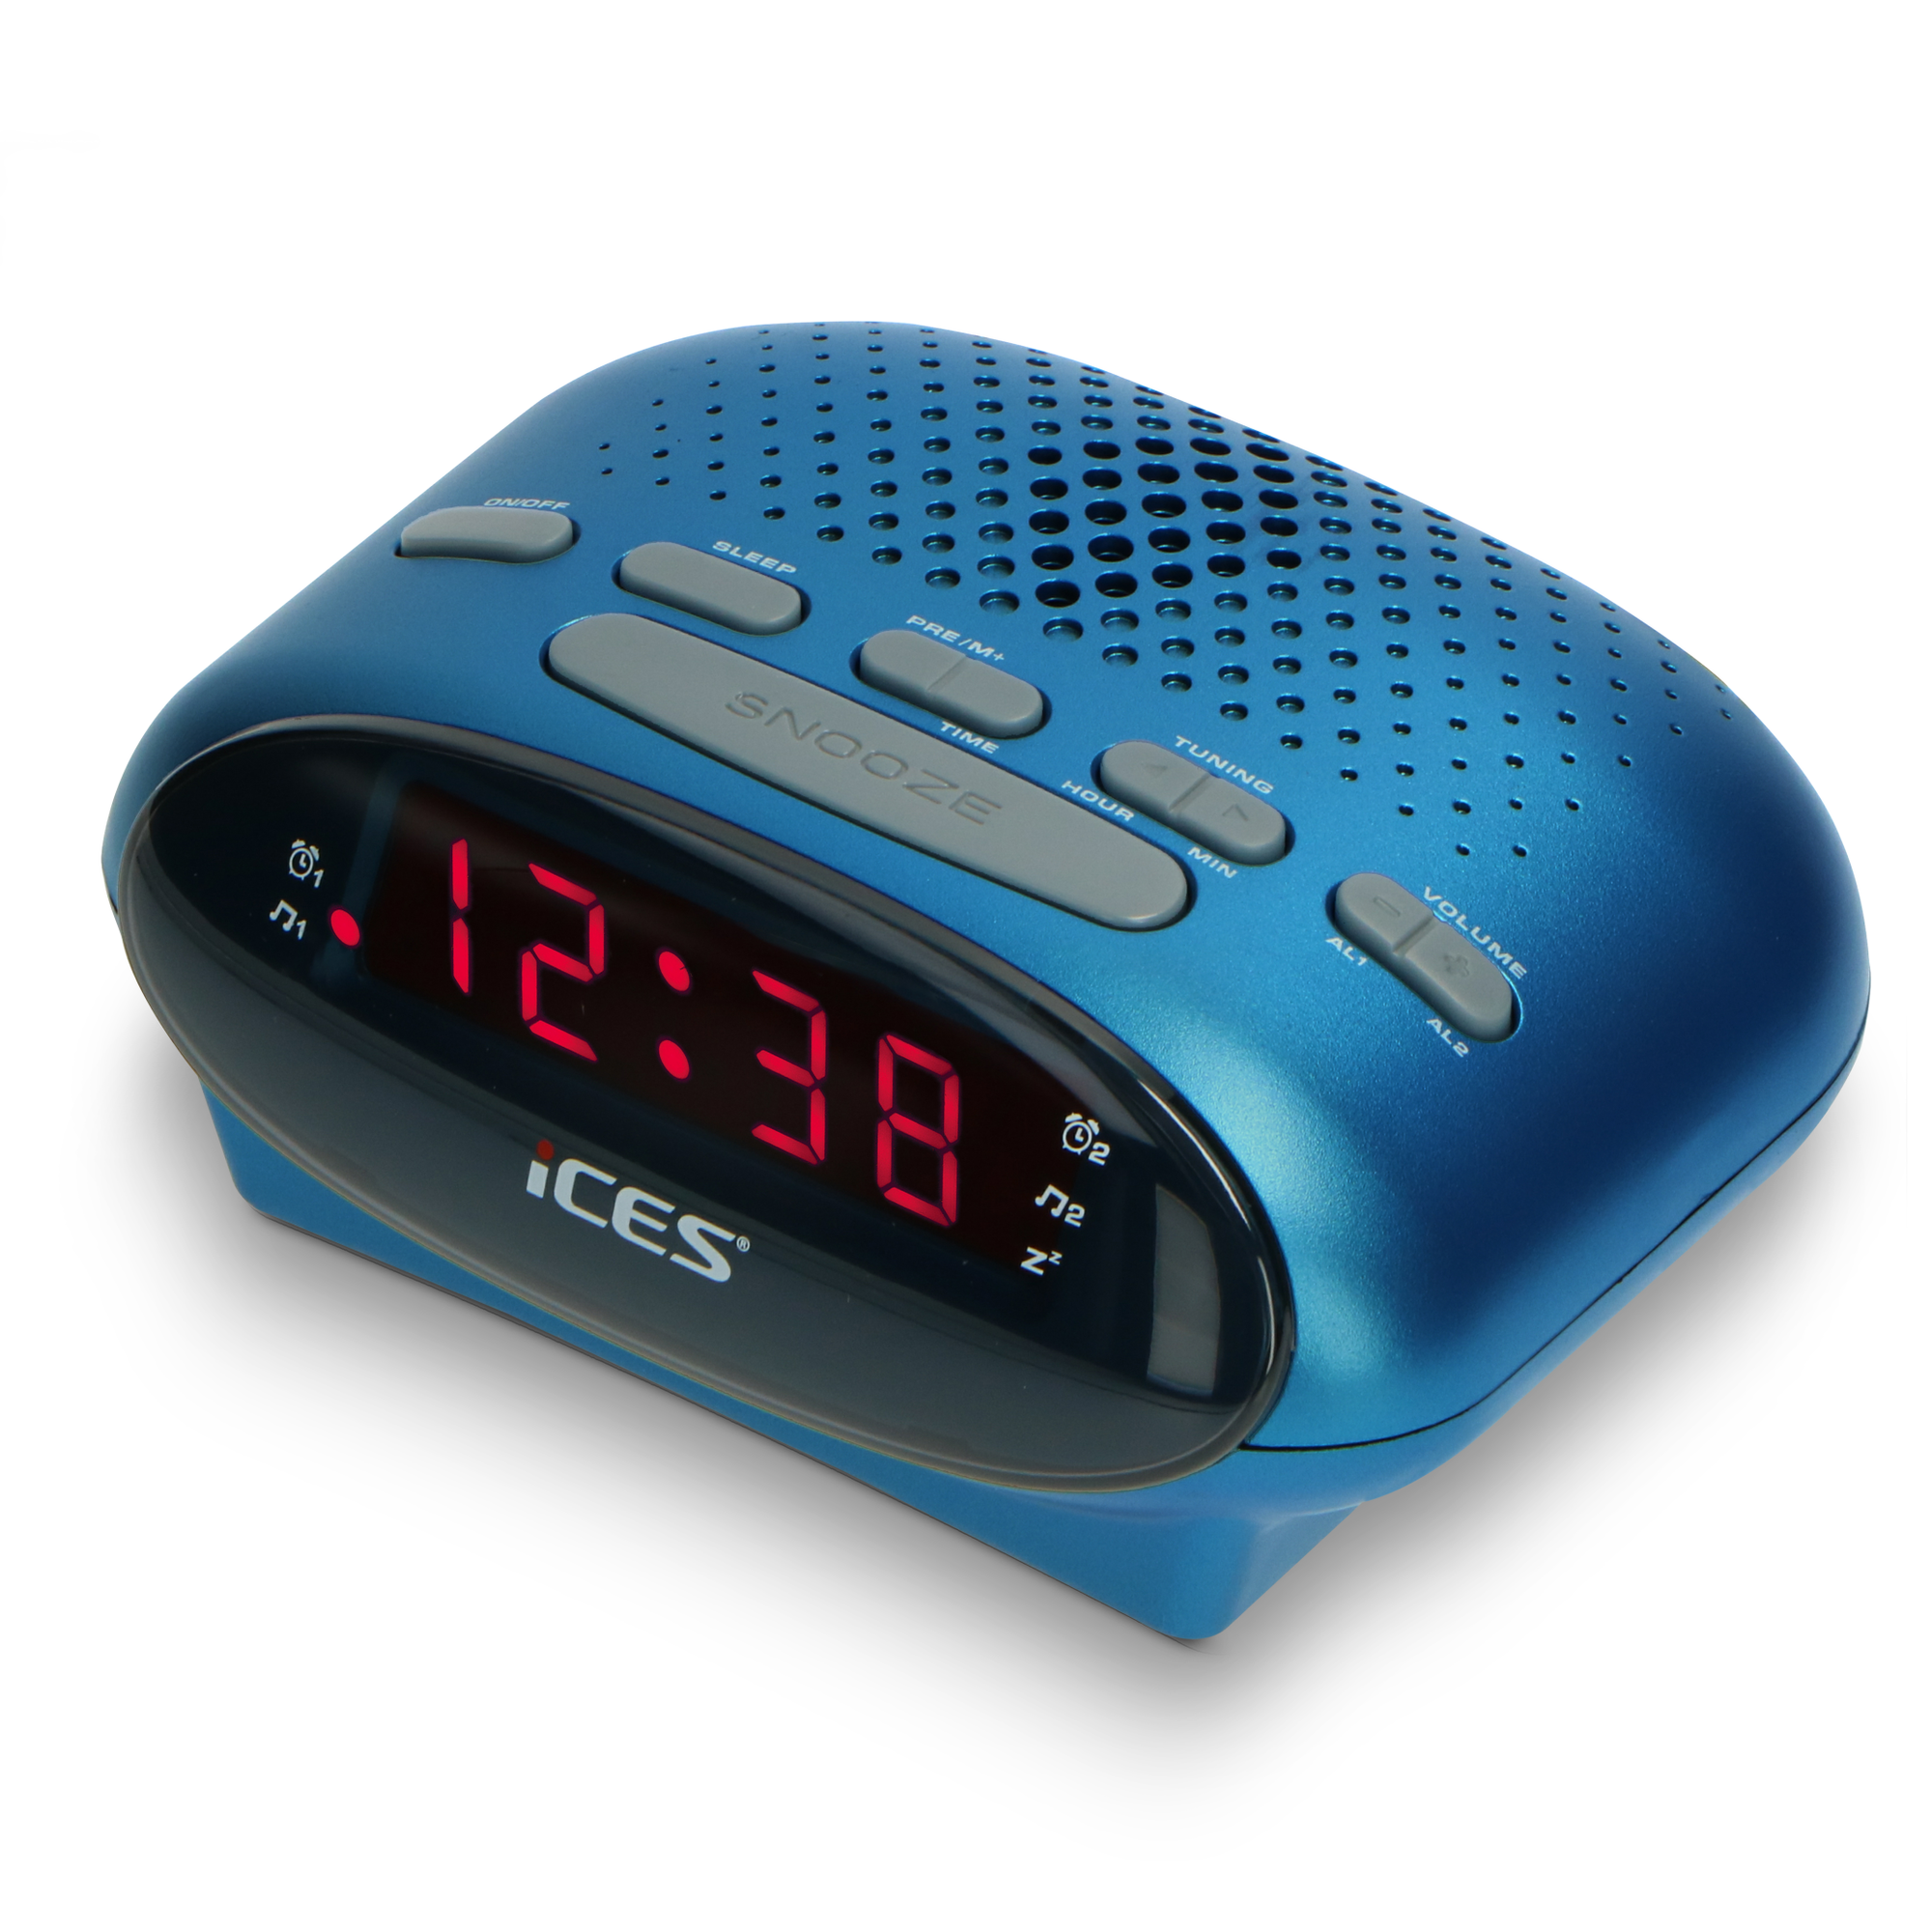 UKW Radiowecker, ICES ICR-210 FM, Tuner, PLL Blue Blau